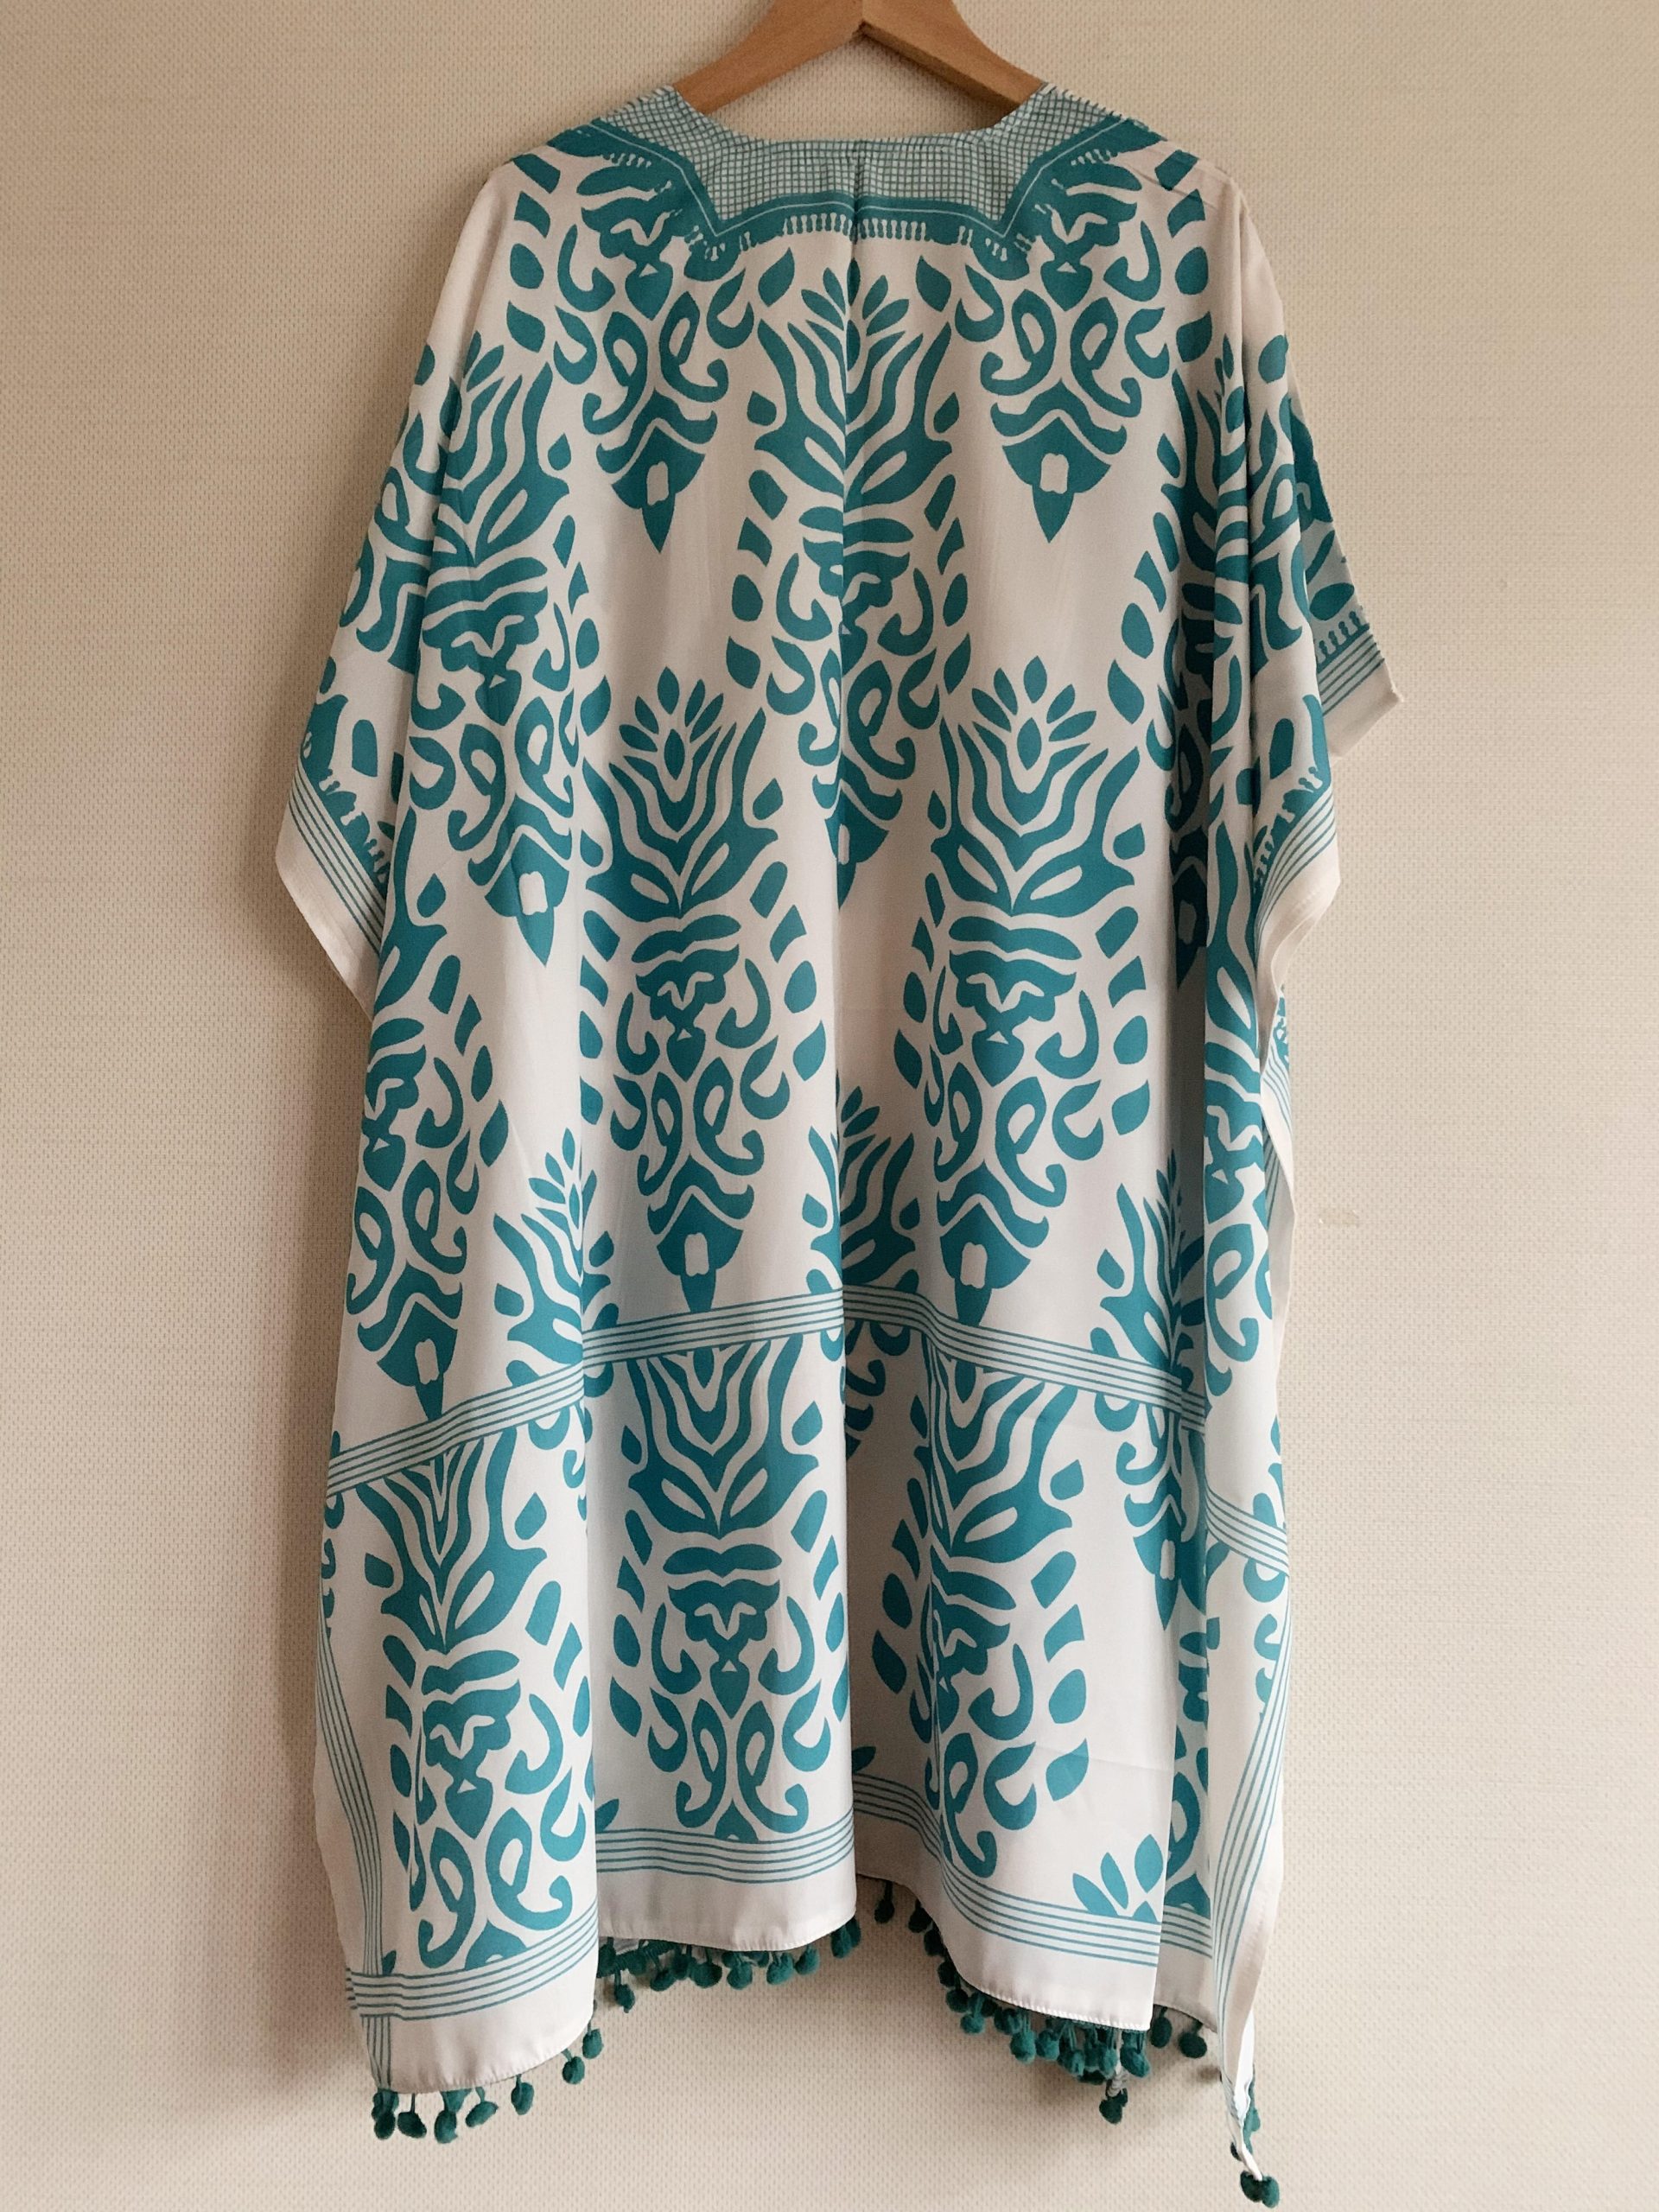 2021 Bohemian Printed V-neck Half Sleeve Plus Size Beach Wear Kimono Cardigan Tunic Women Tops and Blouses Shirts A367